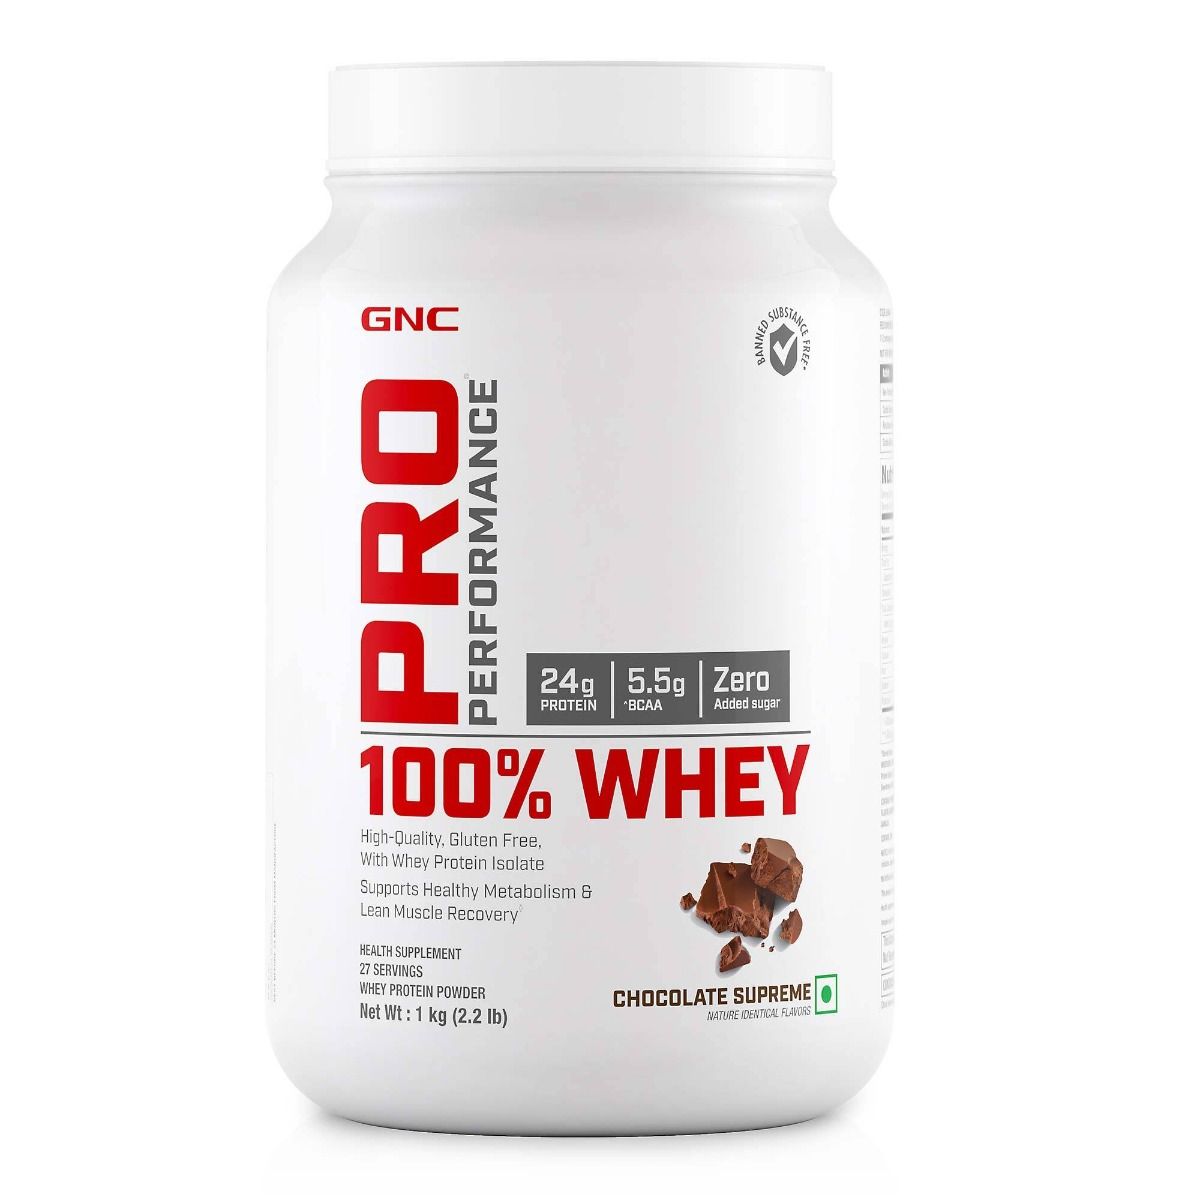 Buy GNC PRO Performance 100% Whey Chocolate Supreme Flavoured Powder, 1 kg Online